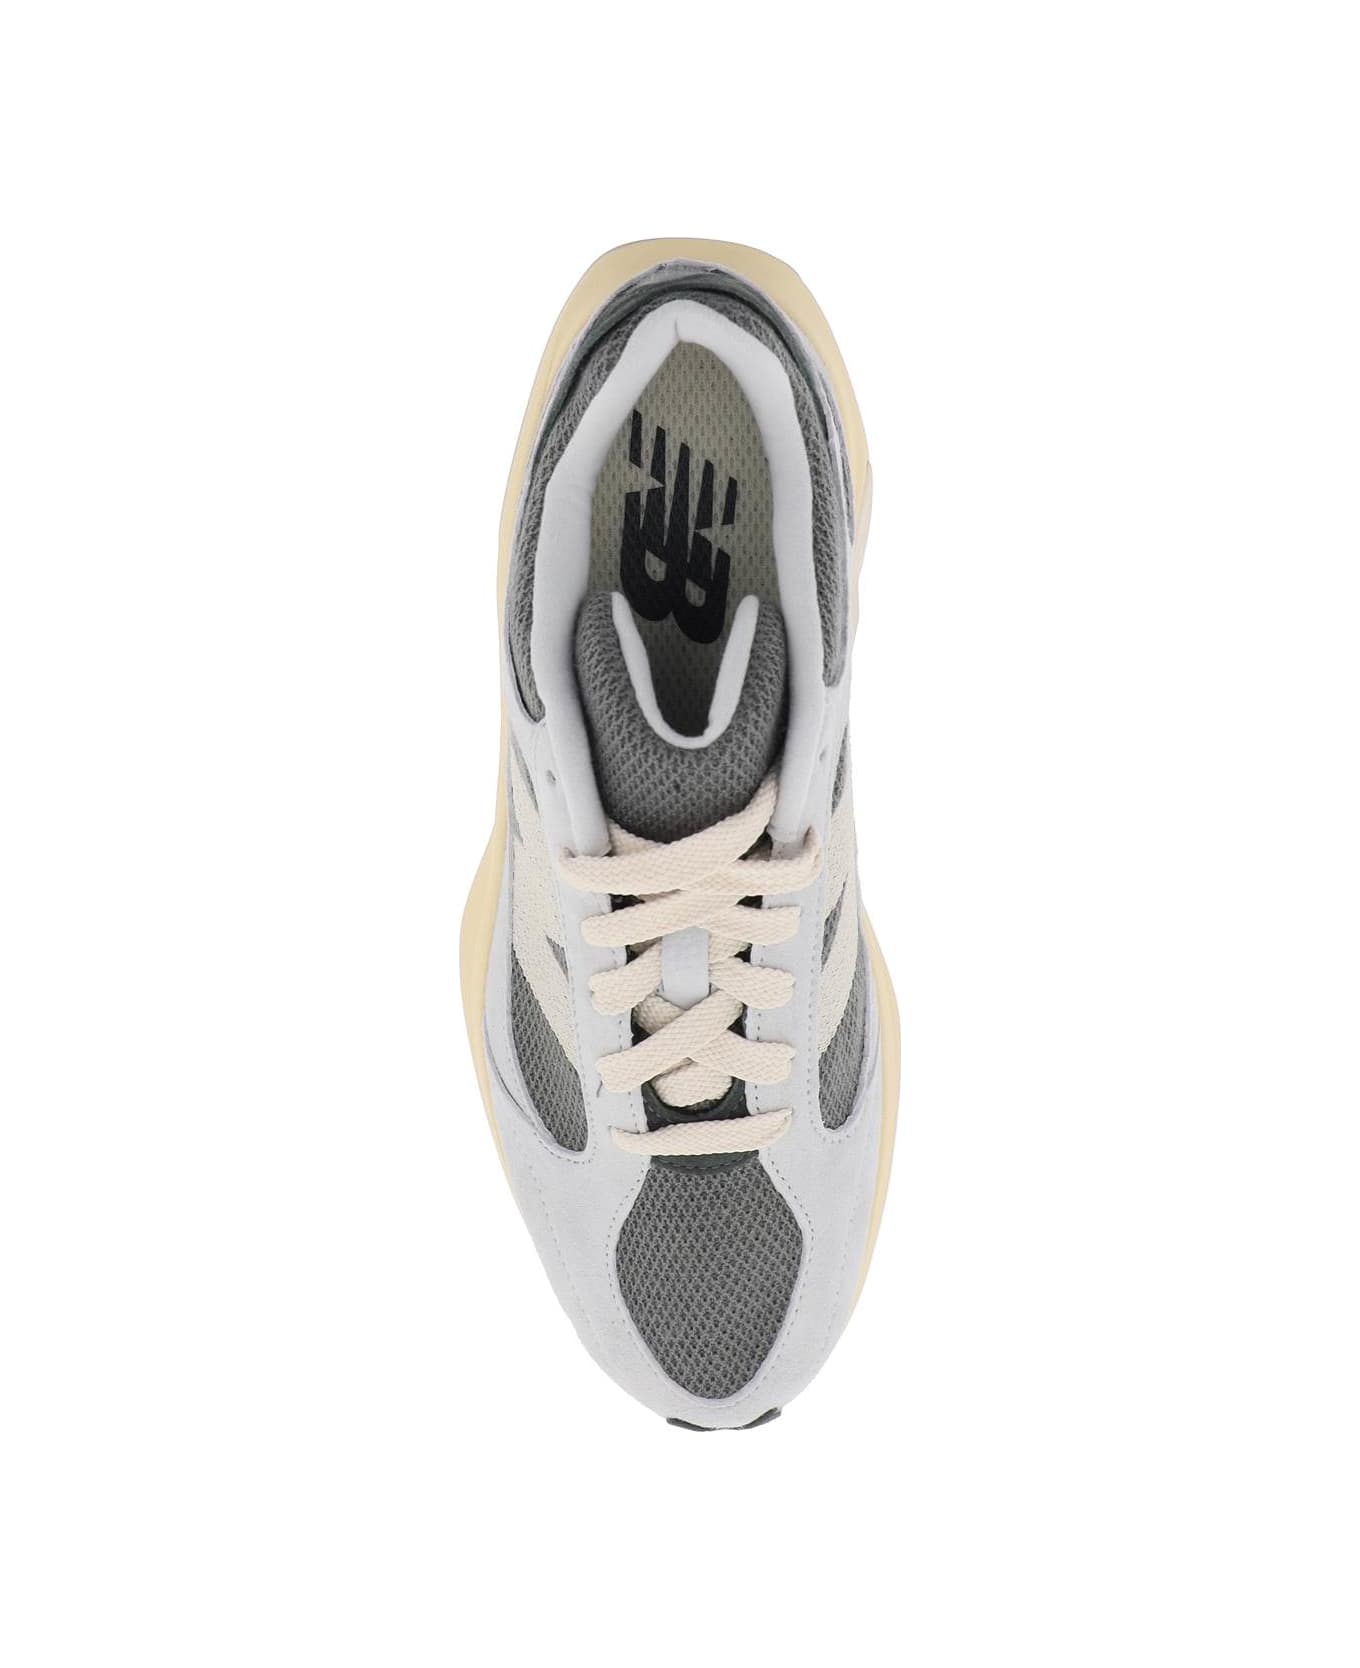 New Balance Wrpd Runner Sneakers - GREY MATTER (Grey)